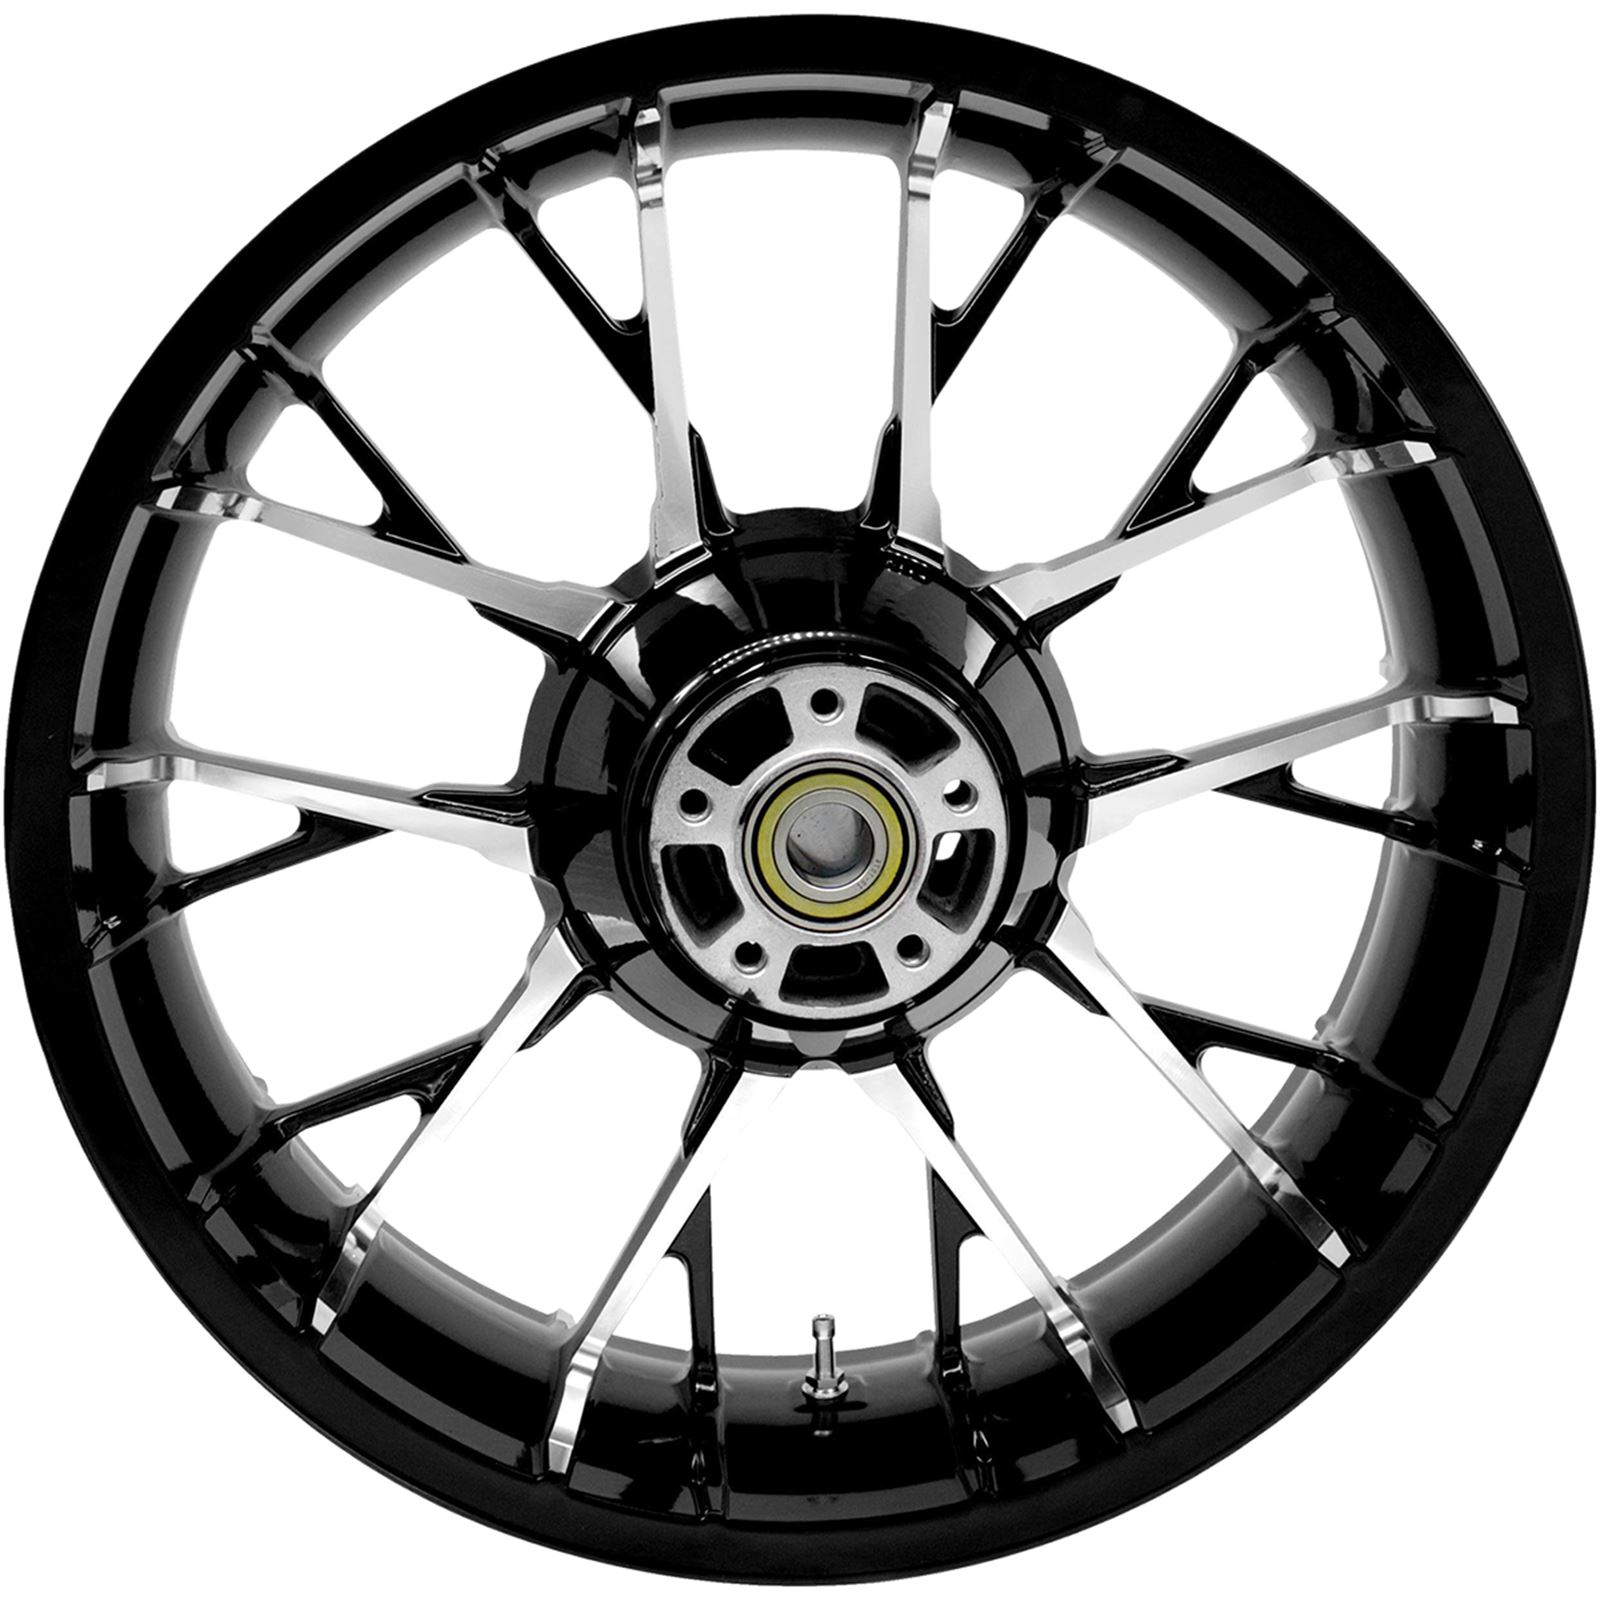 Coastal Moto Rear Wheel - Marlin - Single Disc/ABS - Black Cut - 18"x5.50"